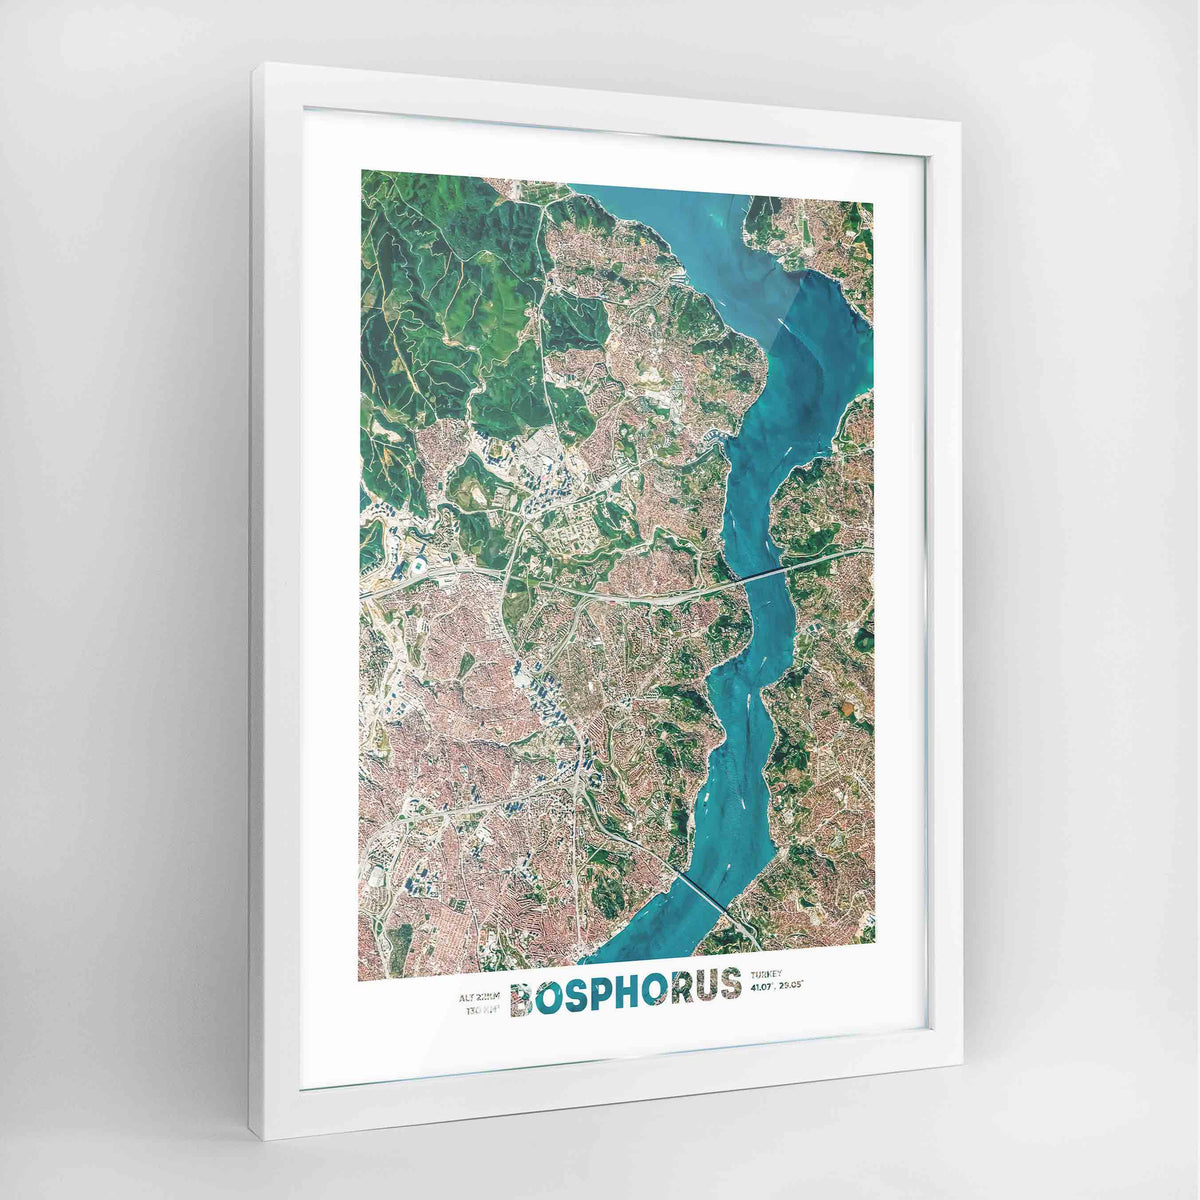 Bosphorus Earth Photography Art Print - Framed